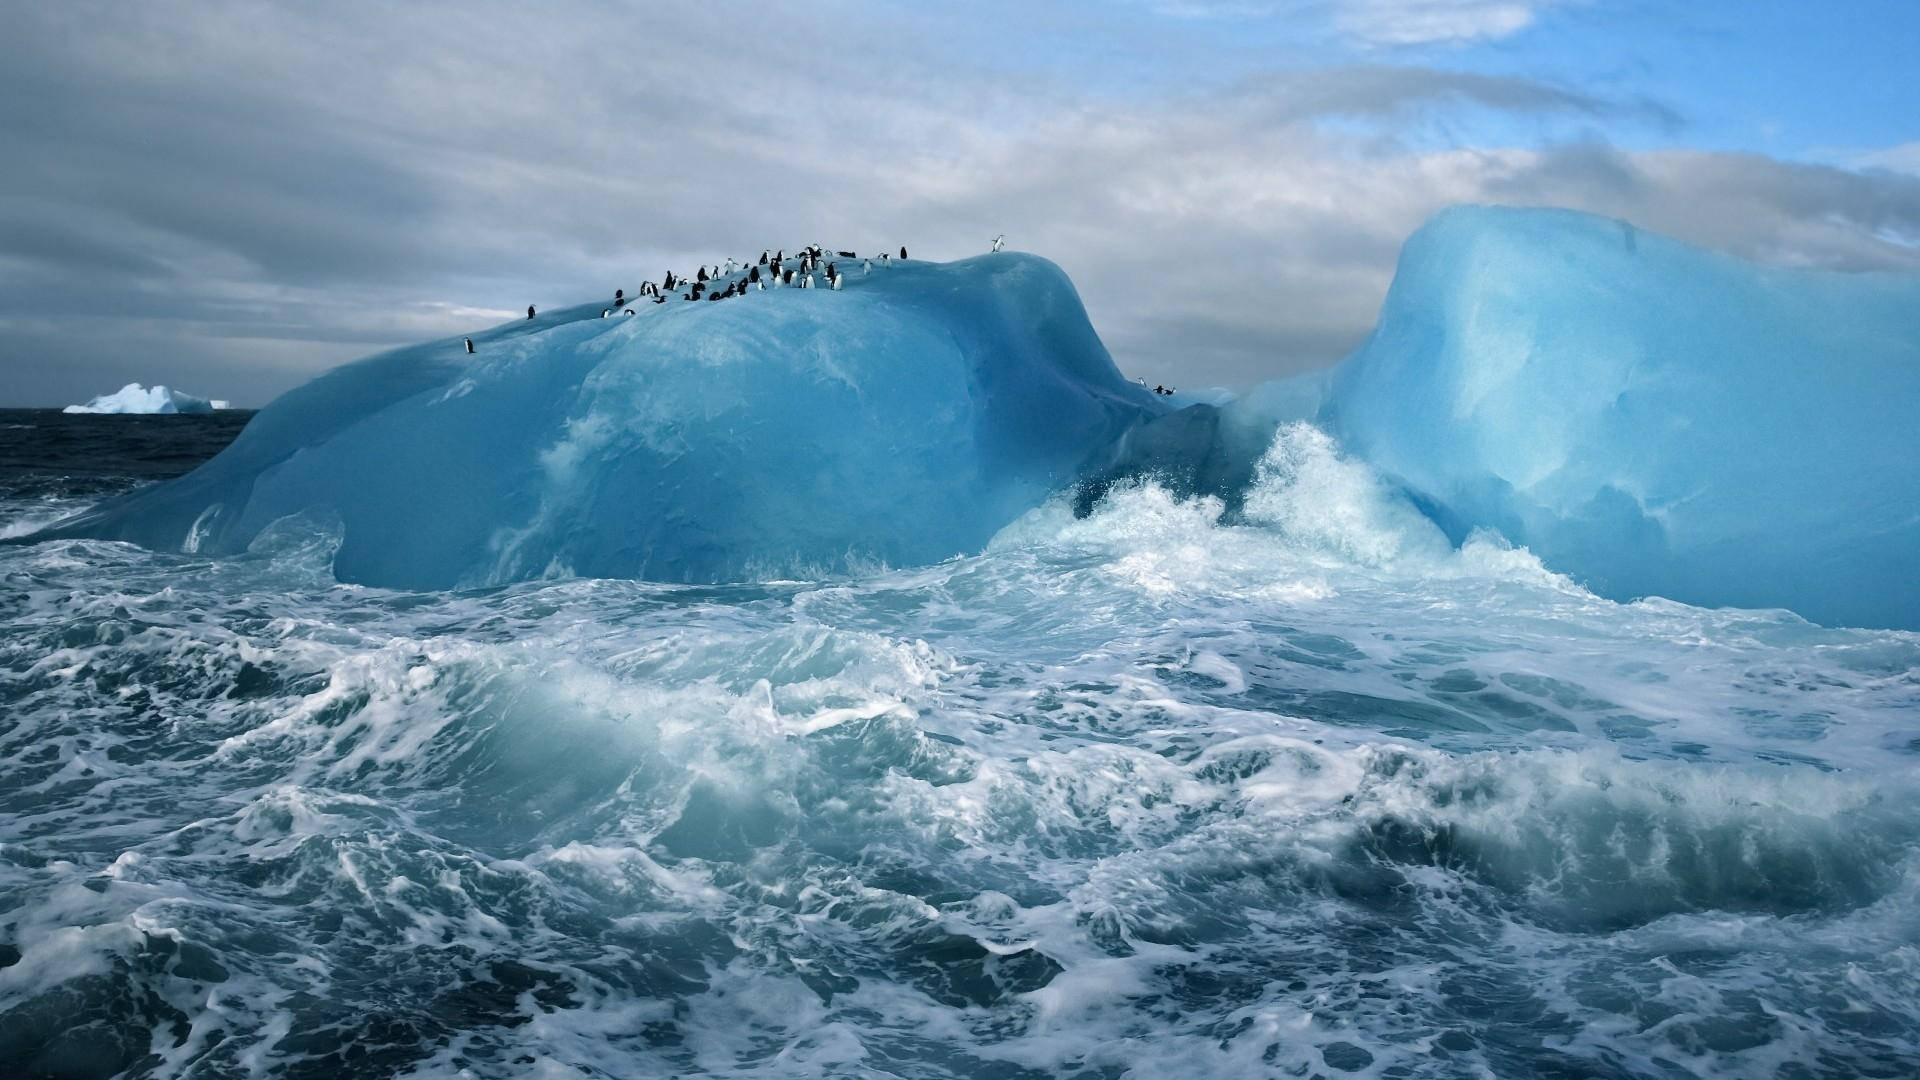 Arctic Iceberg With Penguins Wallpaper